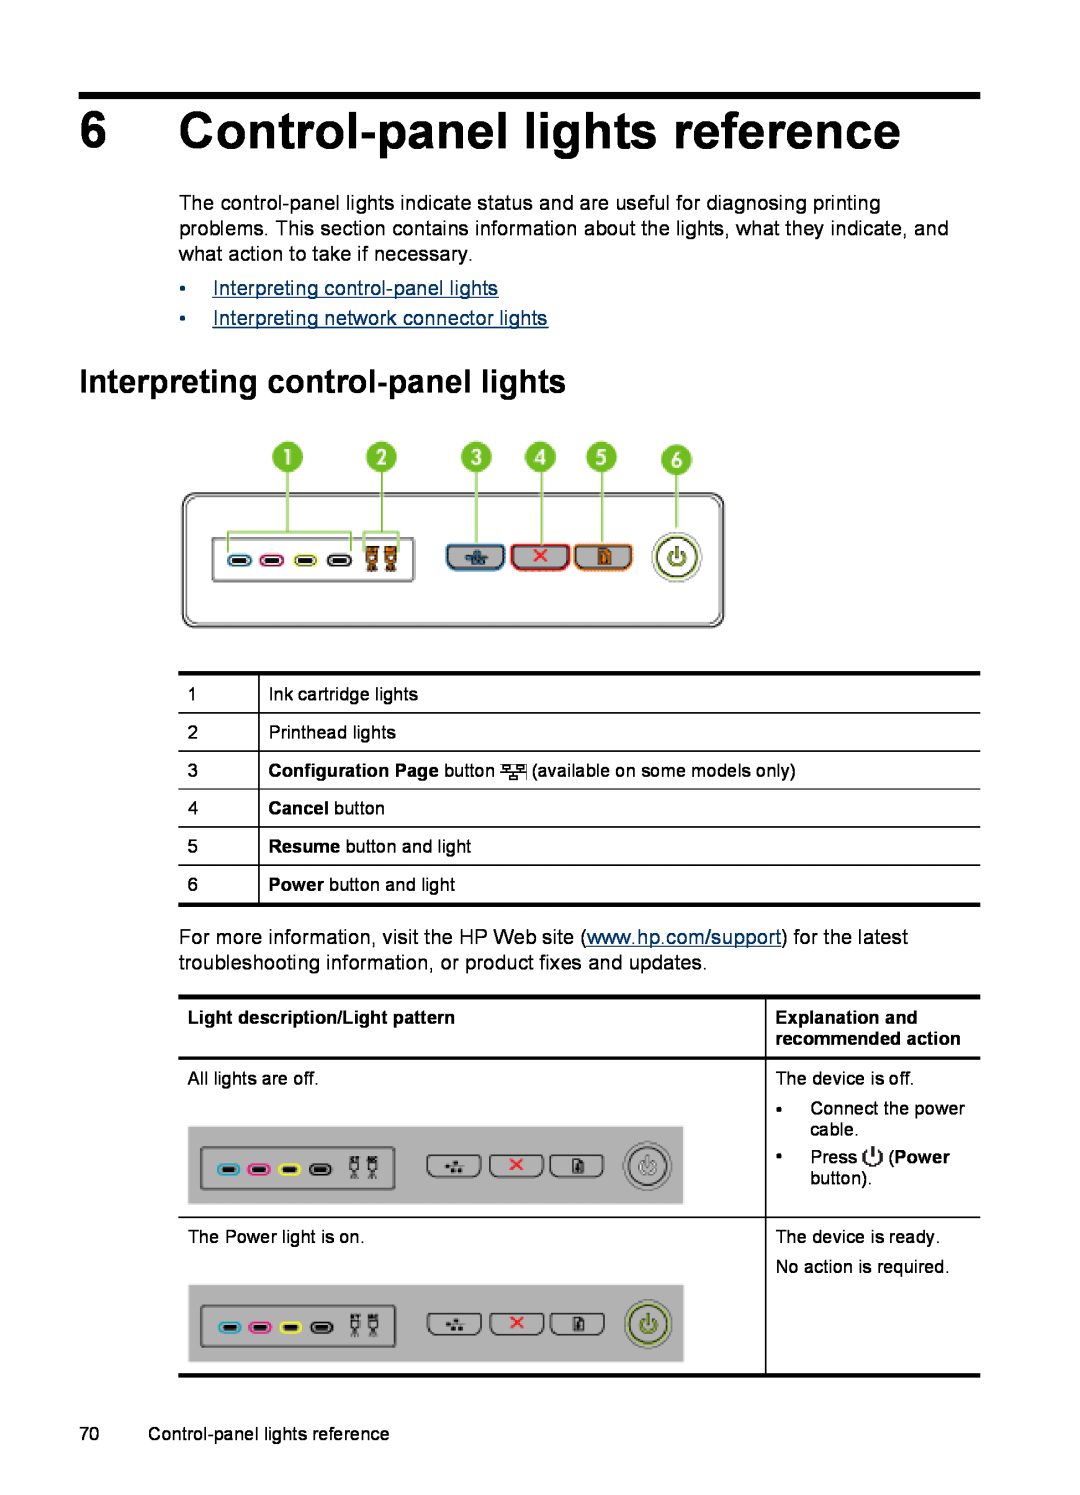 HP K5300, K5400 Control-panel lights reference, Interpreting control-panel lights, Interpreting network connector lights 